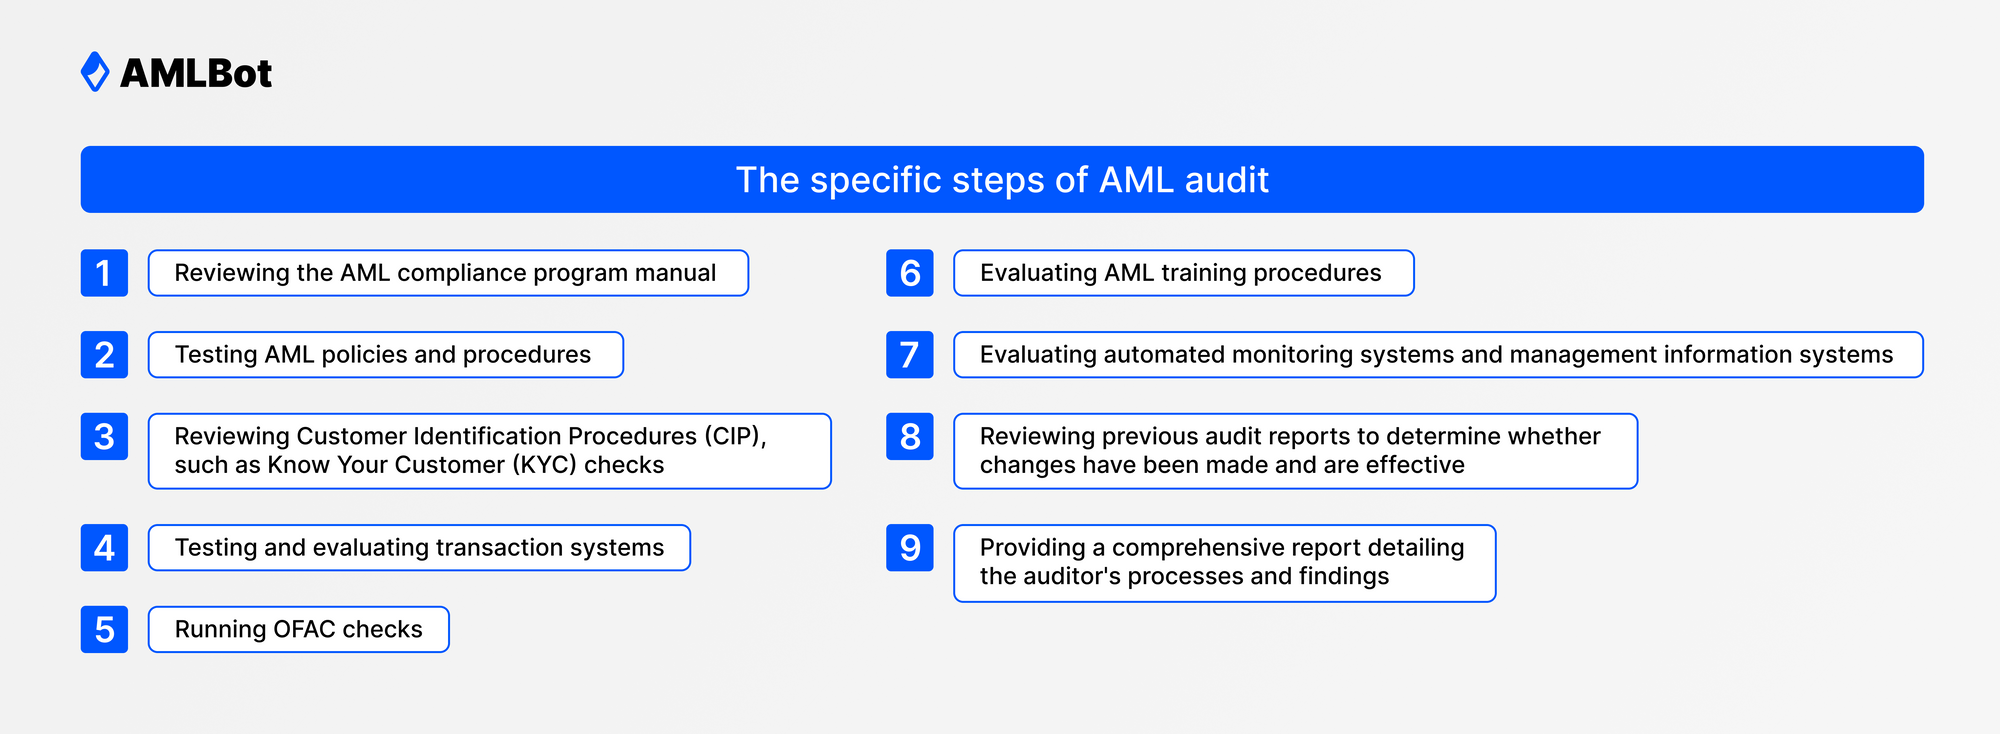 The specofic steps of AML audit